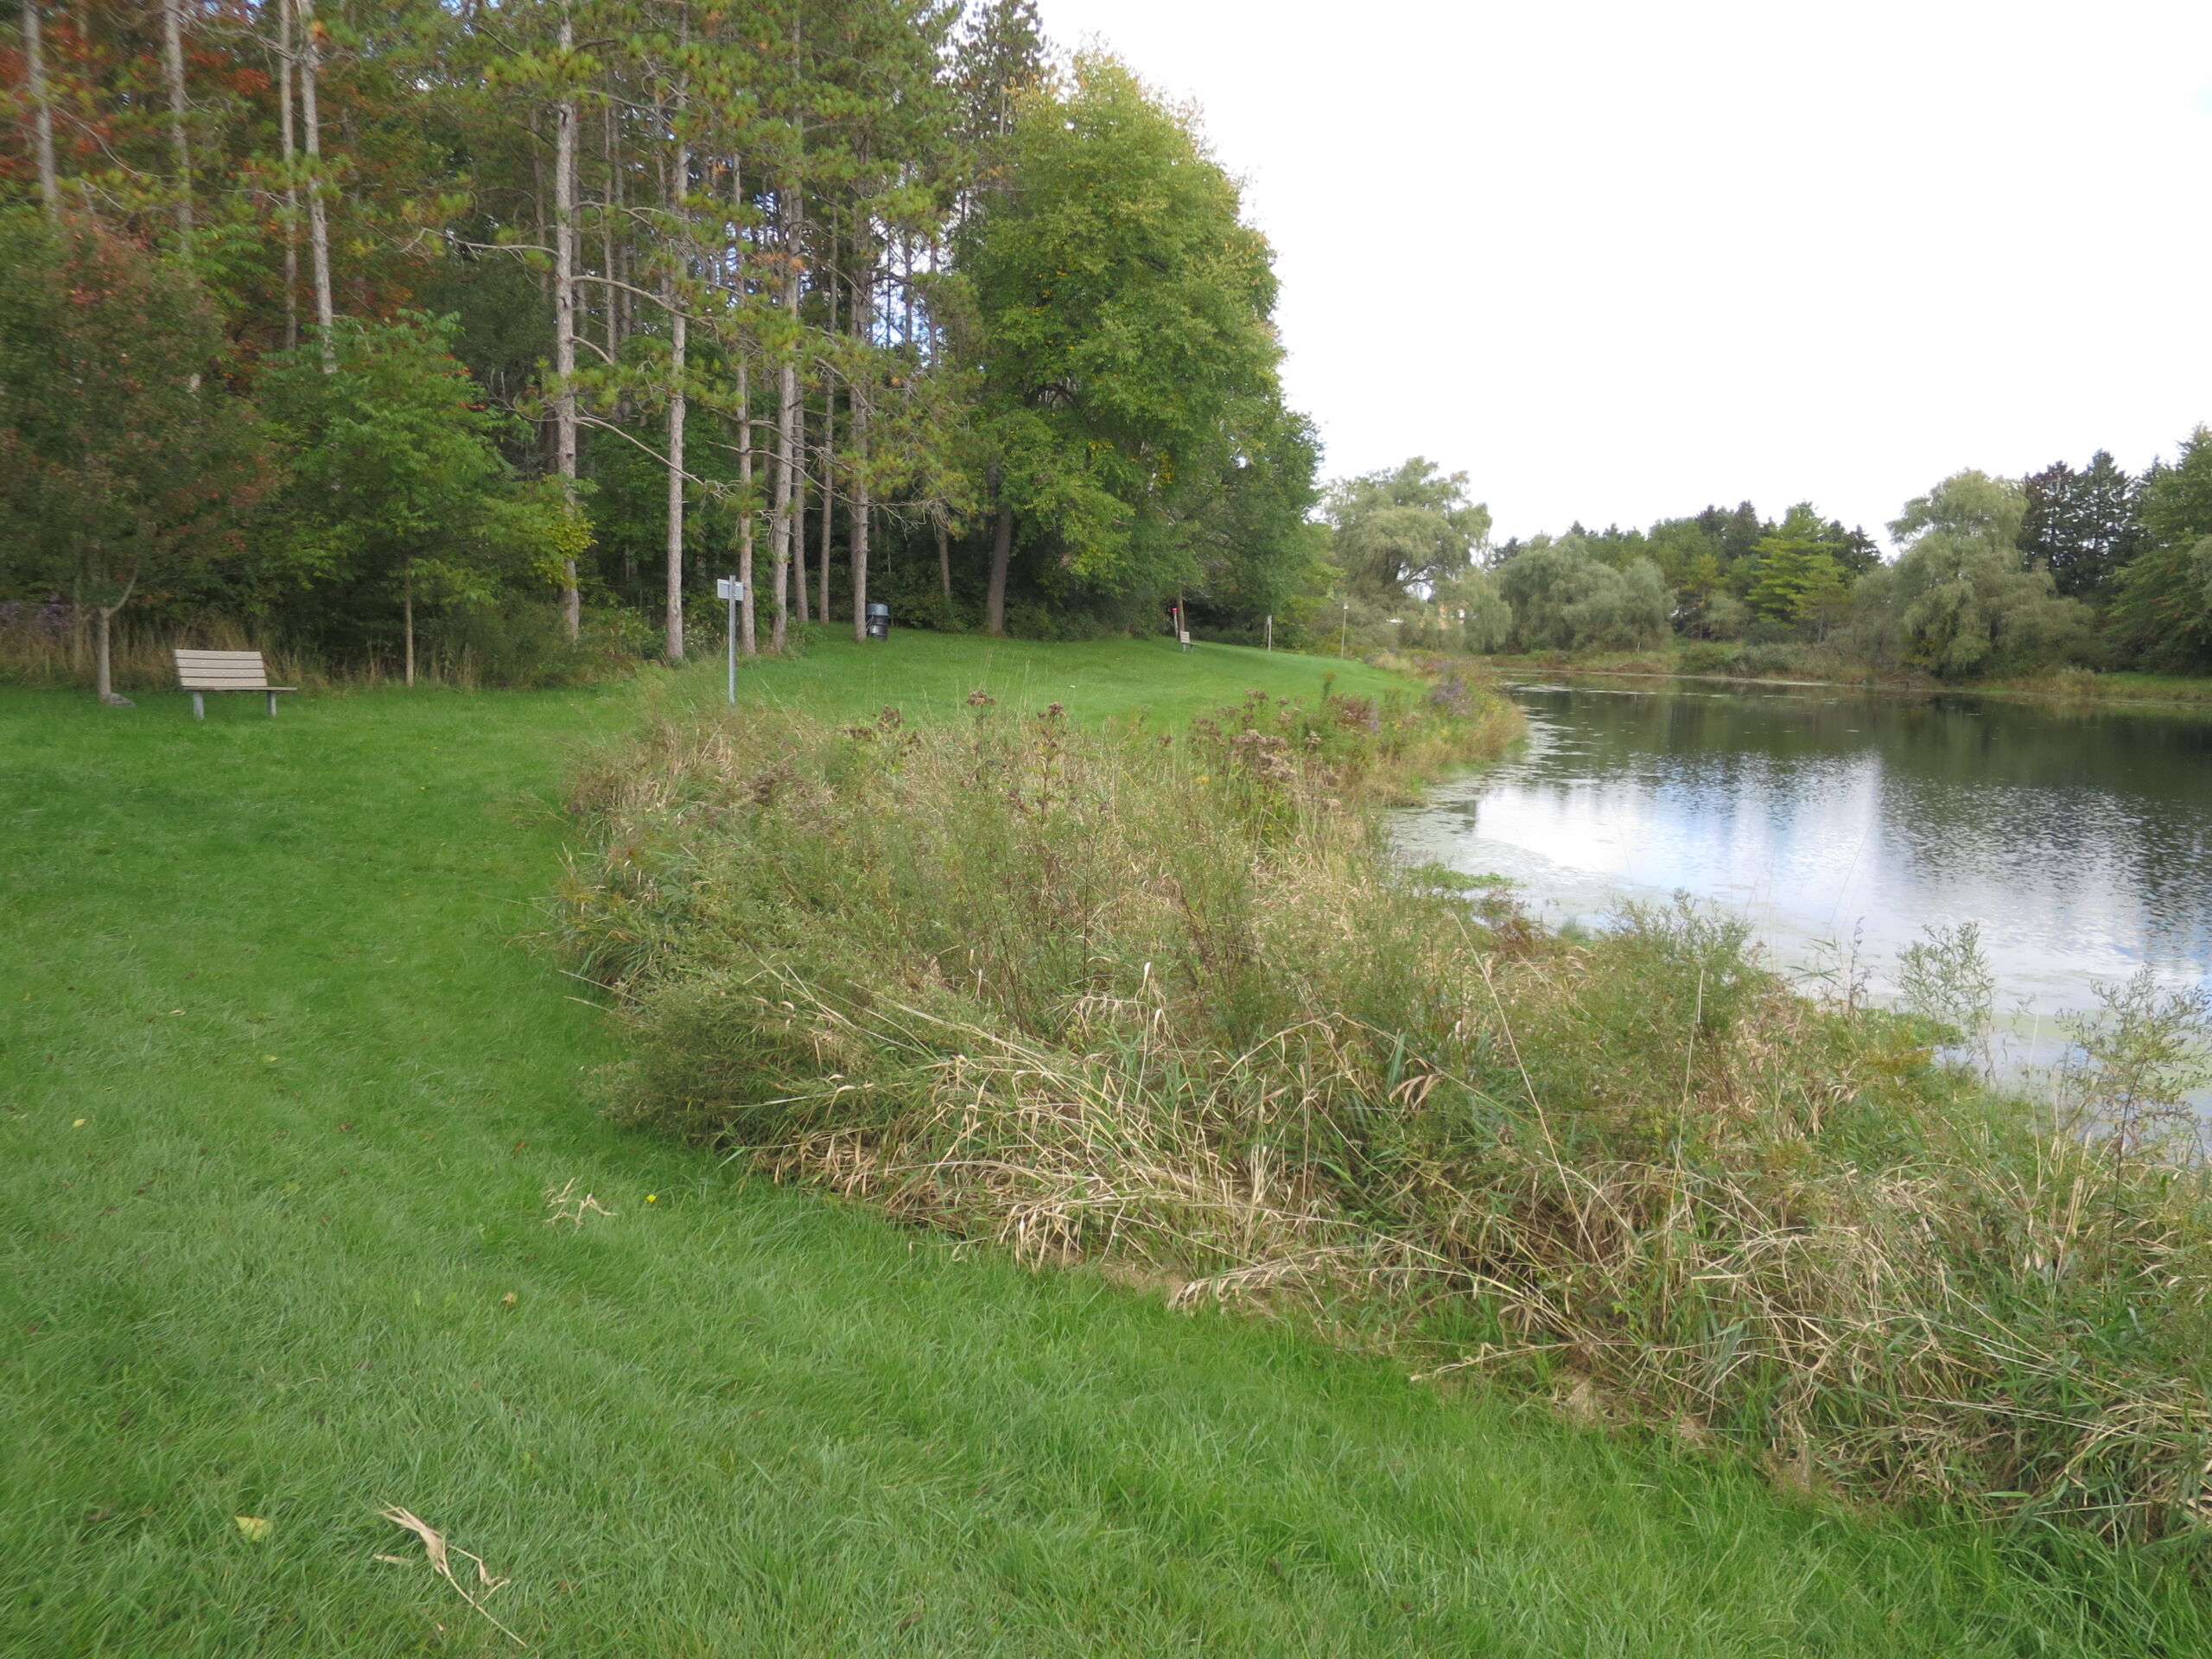 A grassy area next to a river.